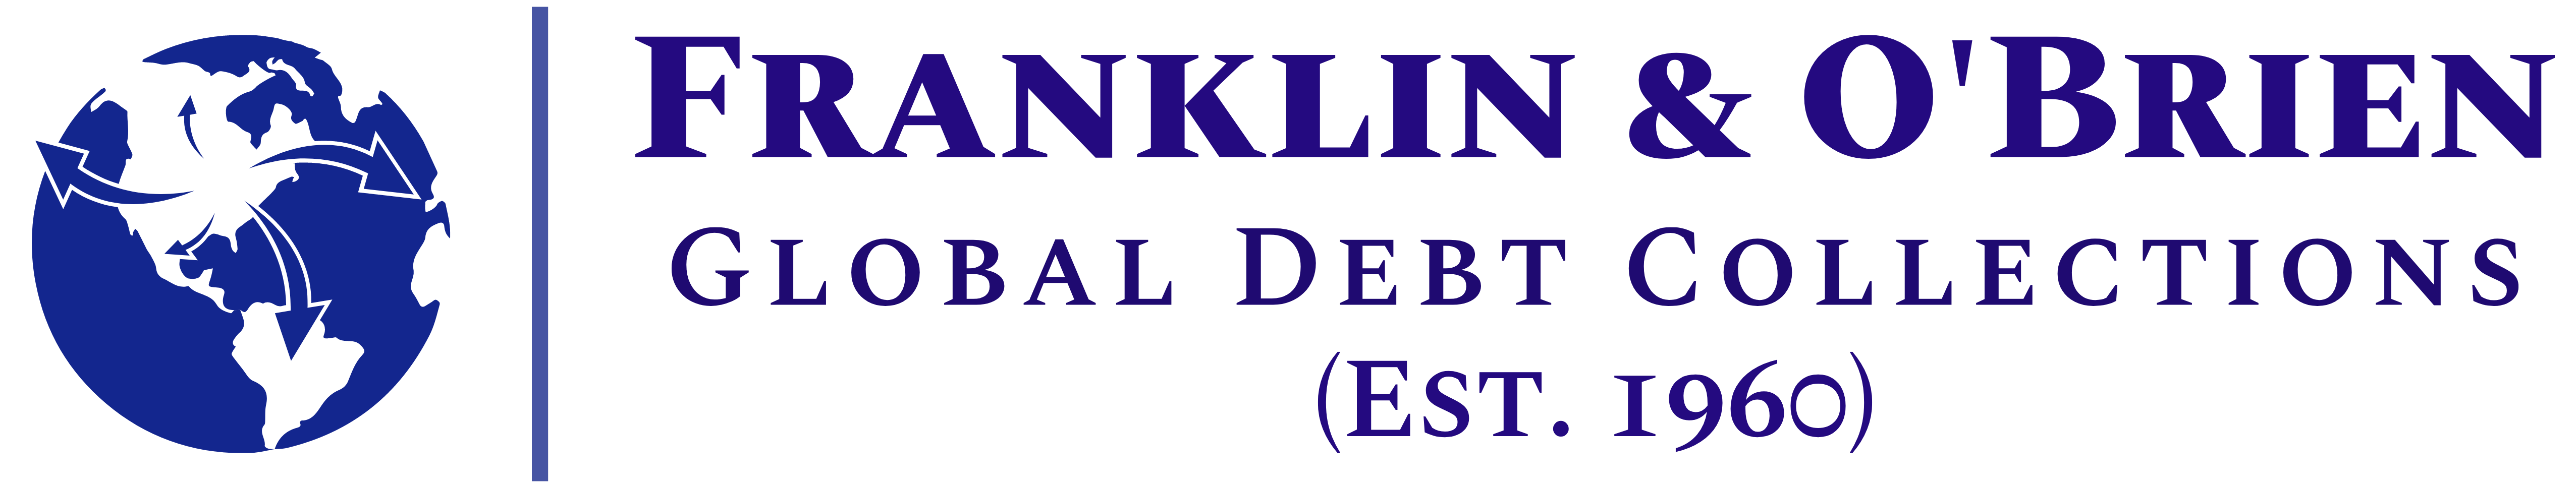 Franklin & O’Brien Legal Services Inc. 